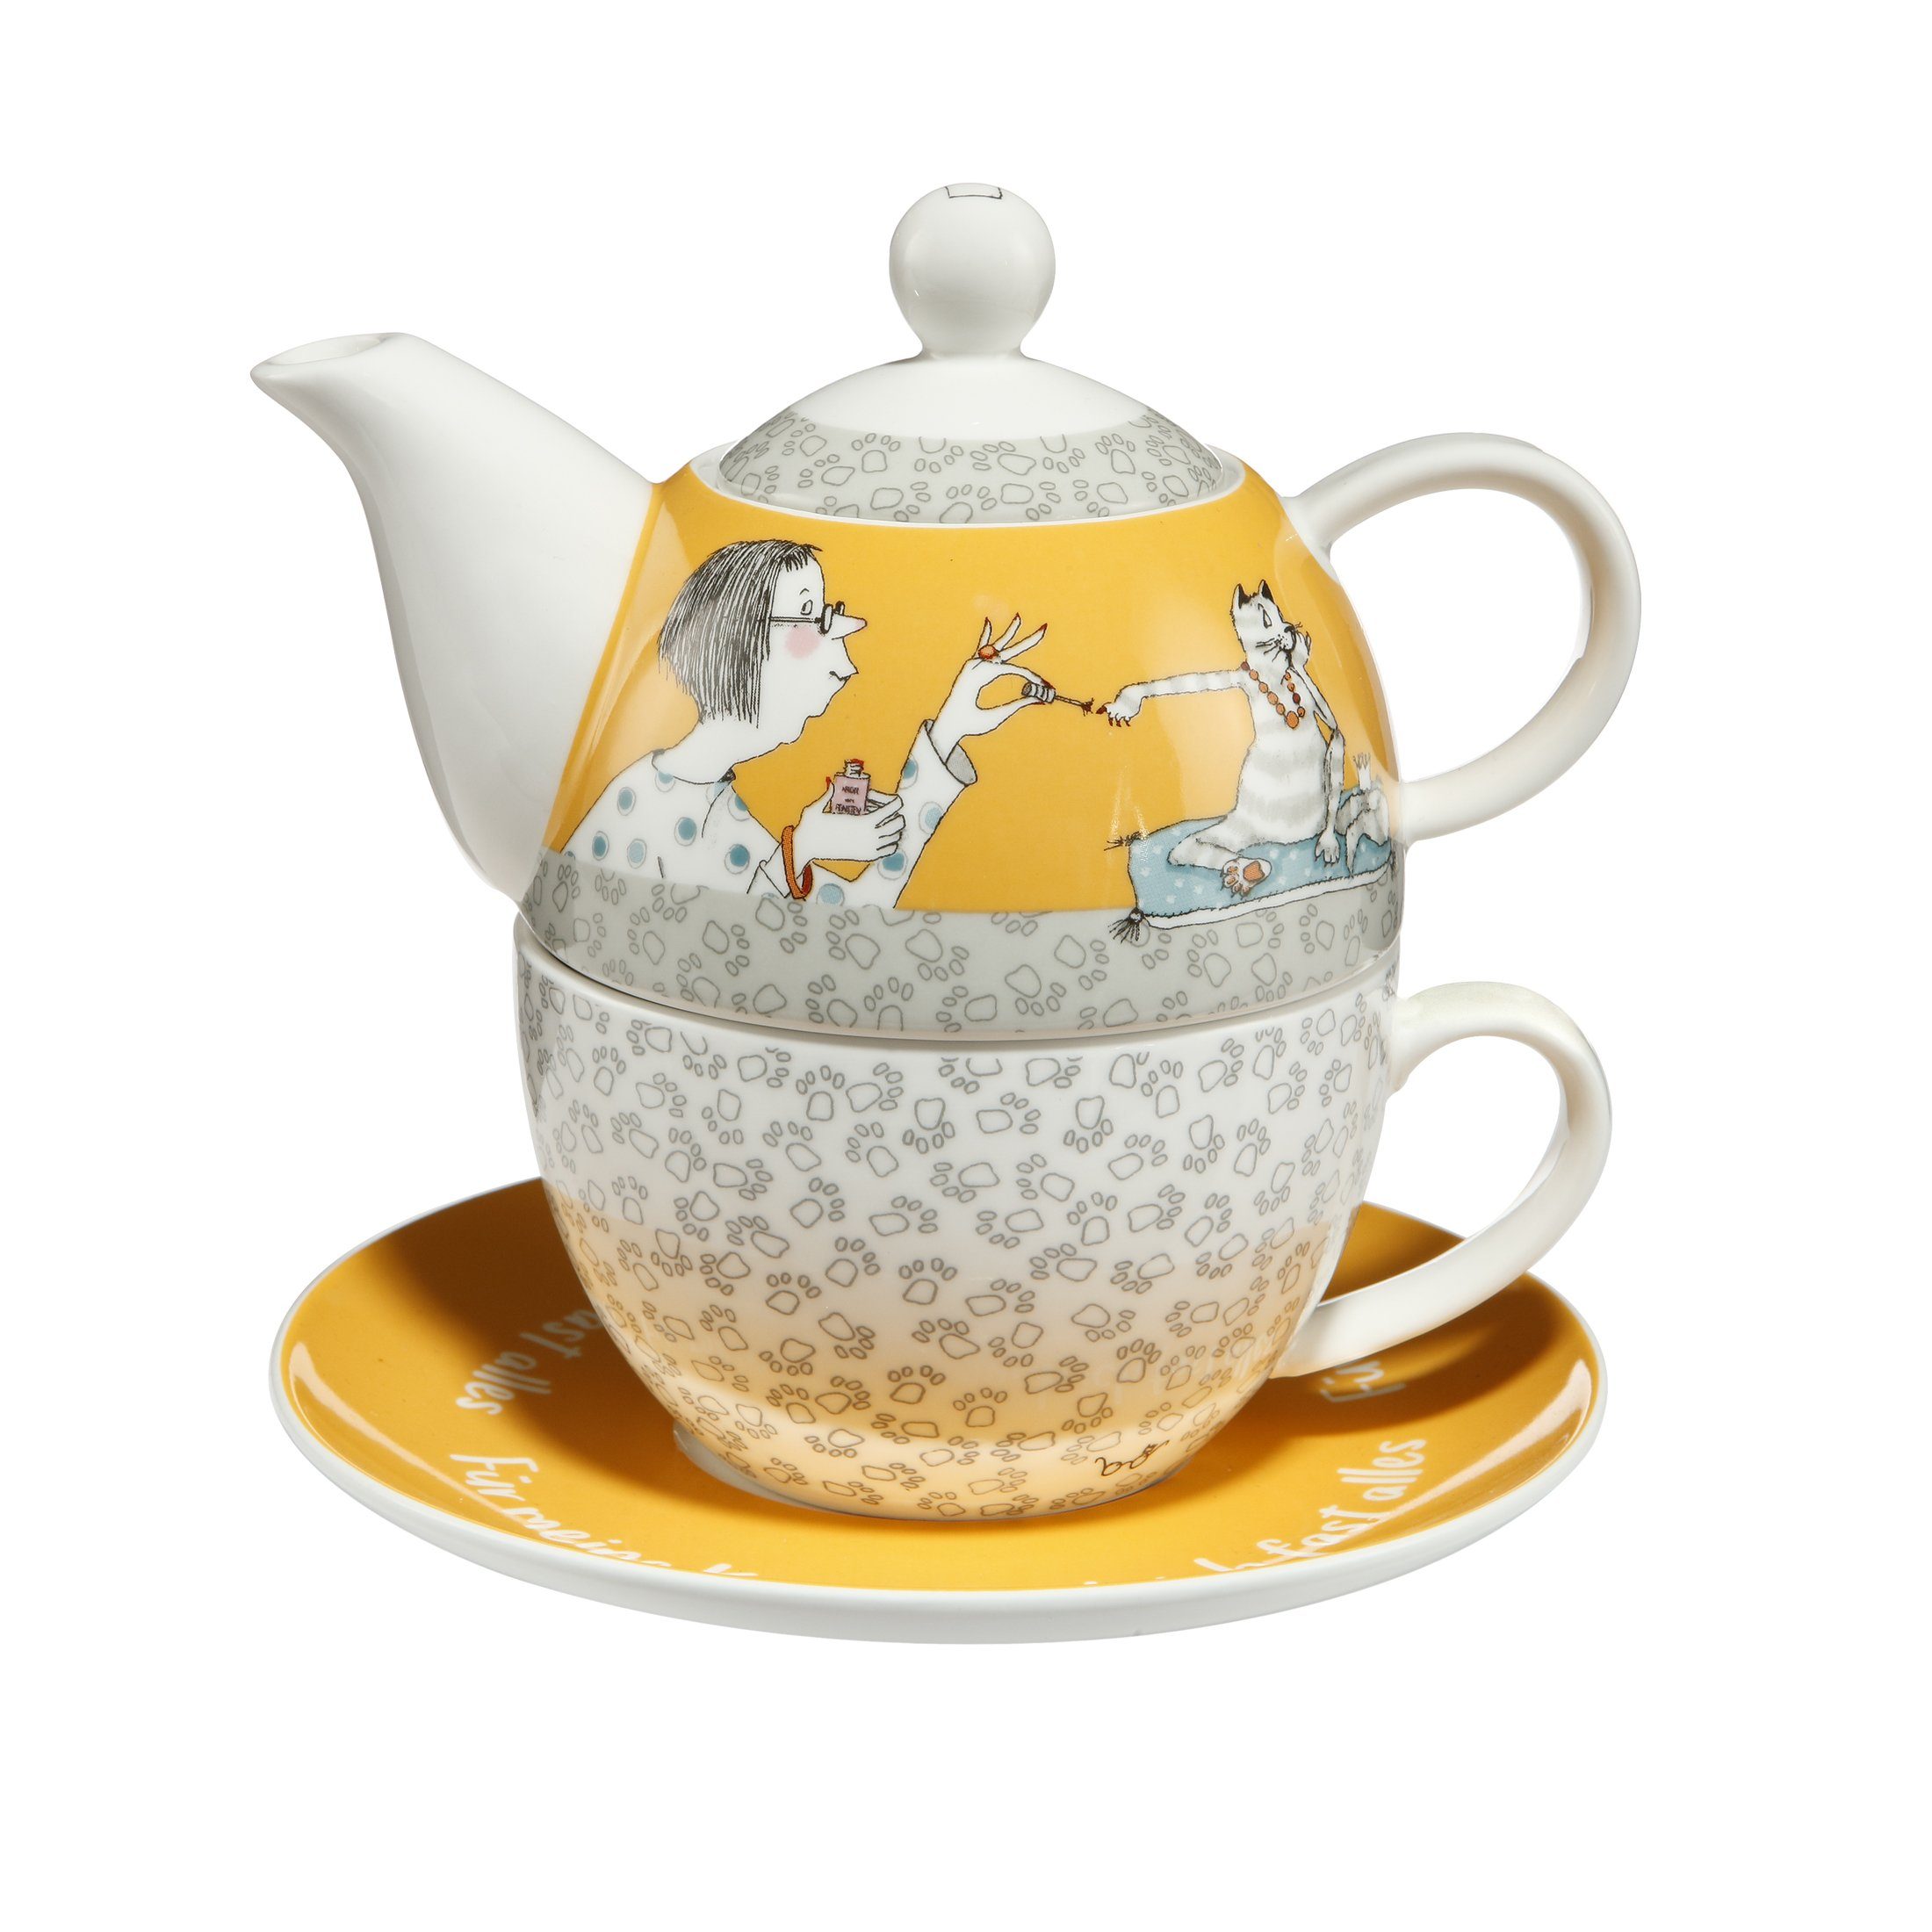 Goebel Teekanne Tea for One Barbara Freundlieb - Für meine Katze, (Stück, 1 Teekanne 1 Teetasse), Teekanne Teetasse